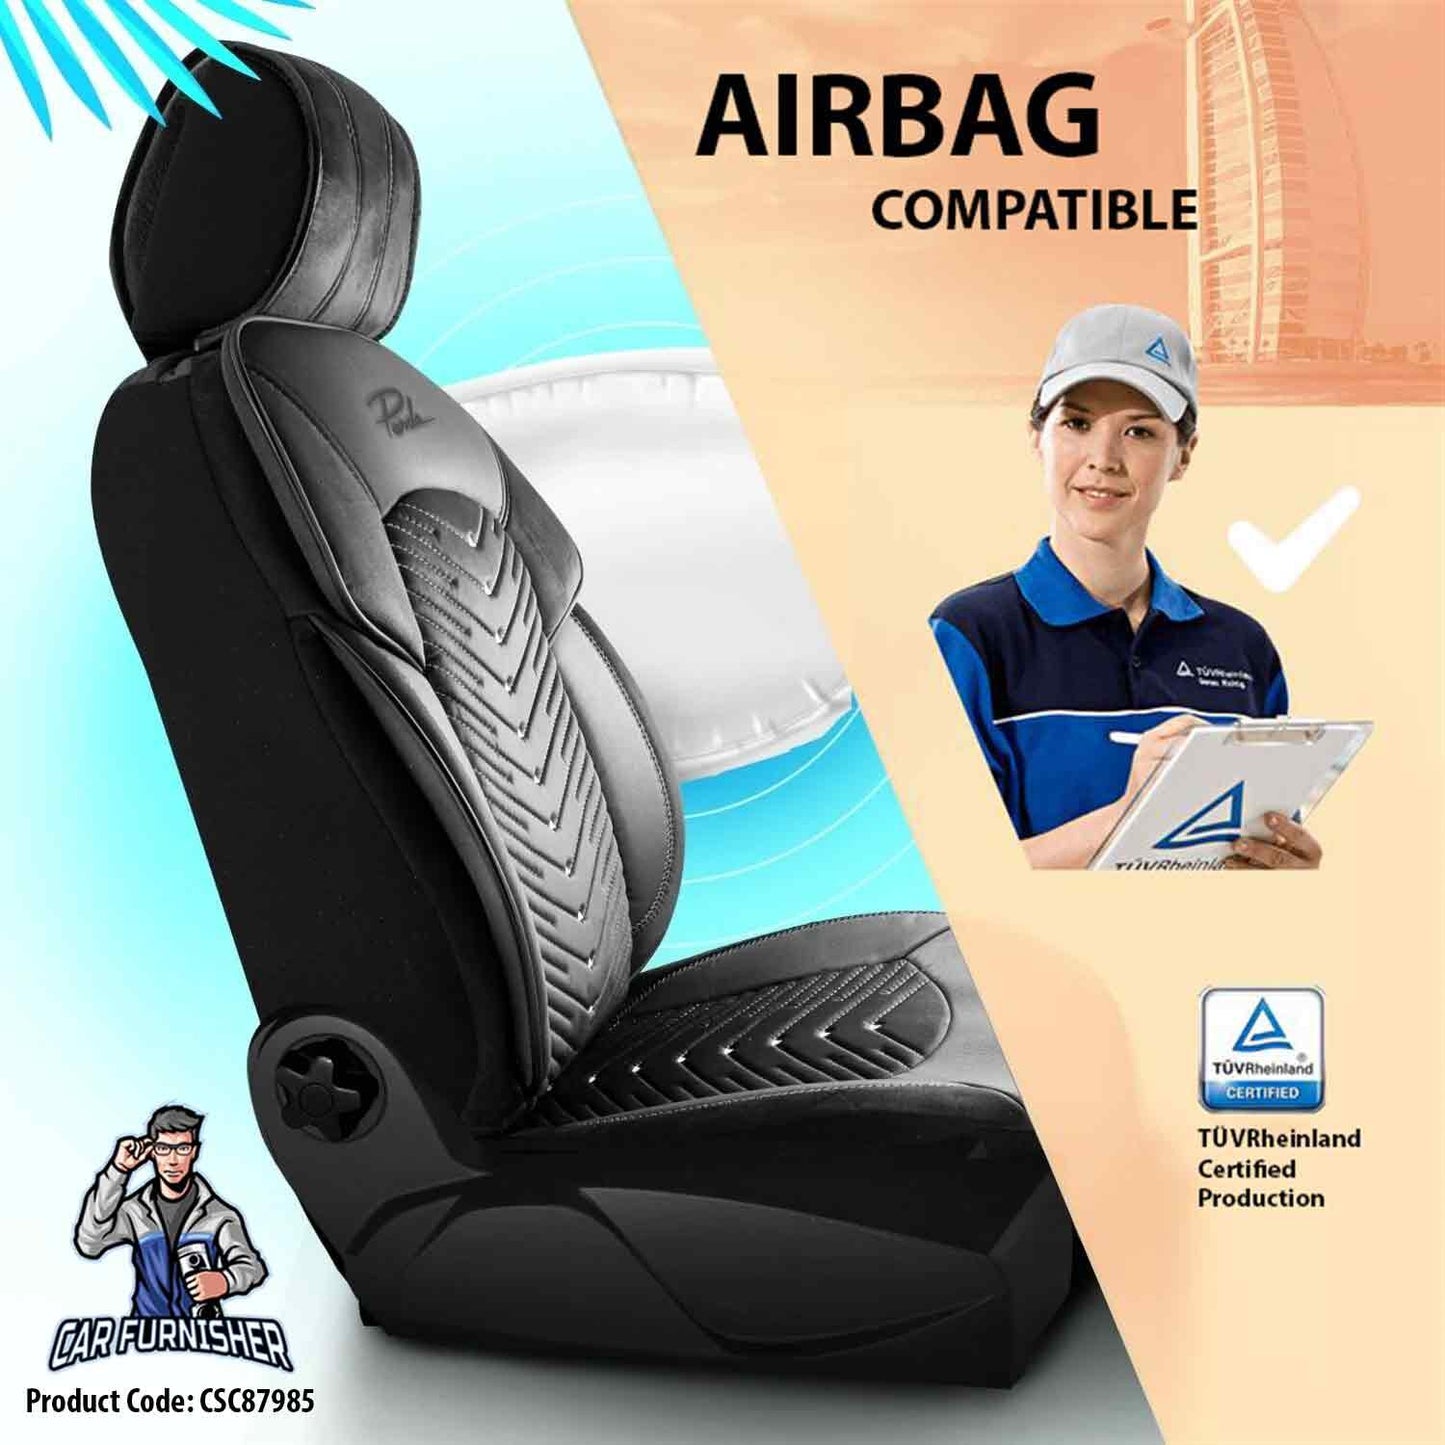 Car Seat Cover Set - Dubai Design Black 5 Seats + Headrests (Full Set) Leather & Velvet Fabric